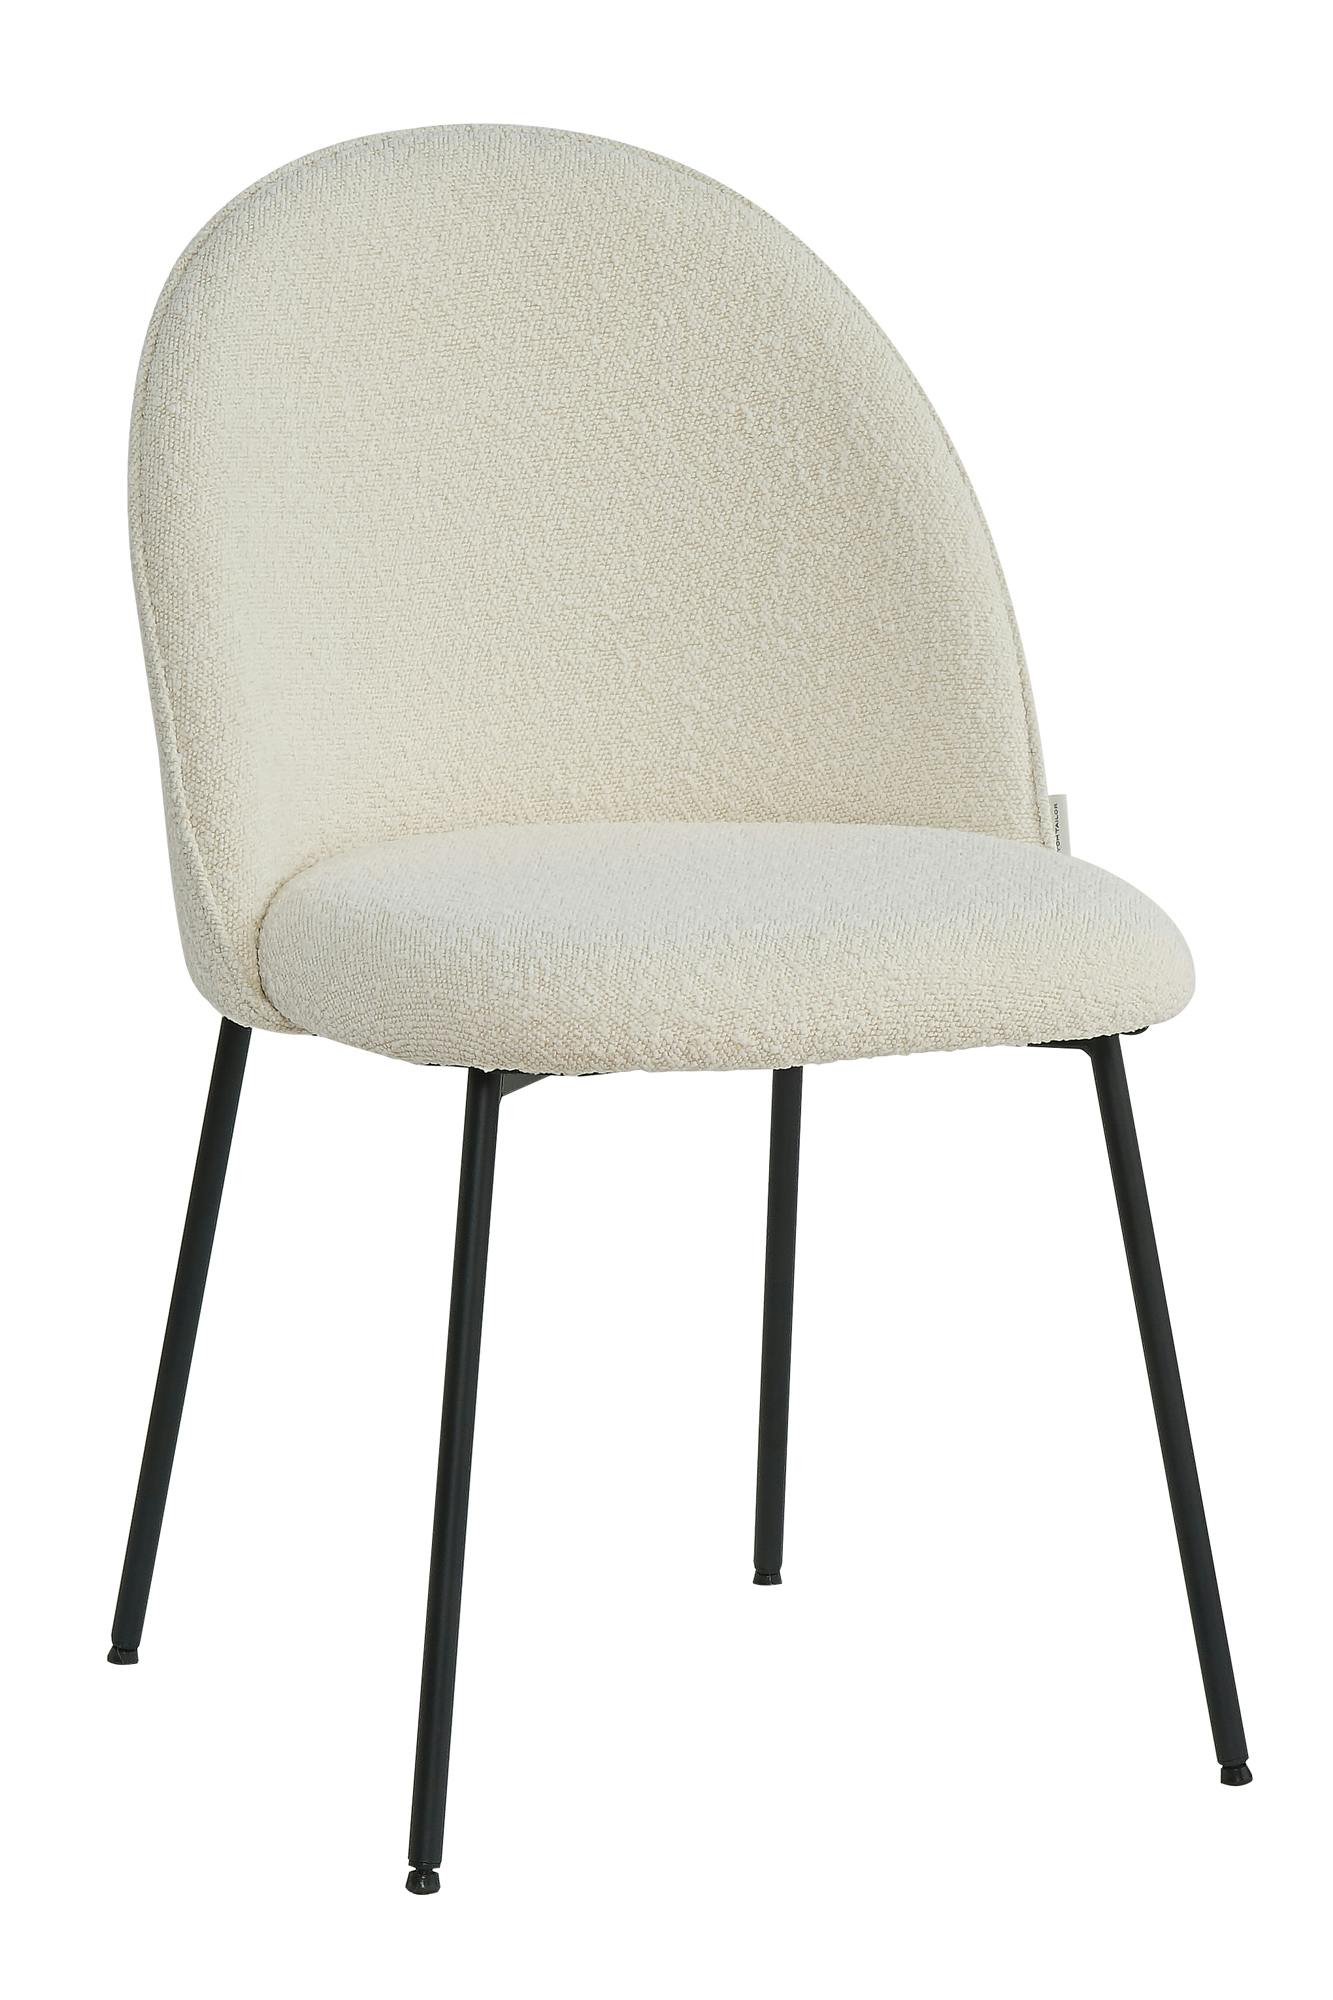 SIT Möbel 2er-Set | Tom B57xT54xH52cm Marktplatz Chair | T-Bouclé |Serie Pad METRO | |02412-03 Stuhl gepolstert Metall beige| Beine Tailor | SIT&CHAIRS schwarz